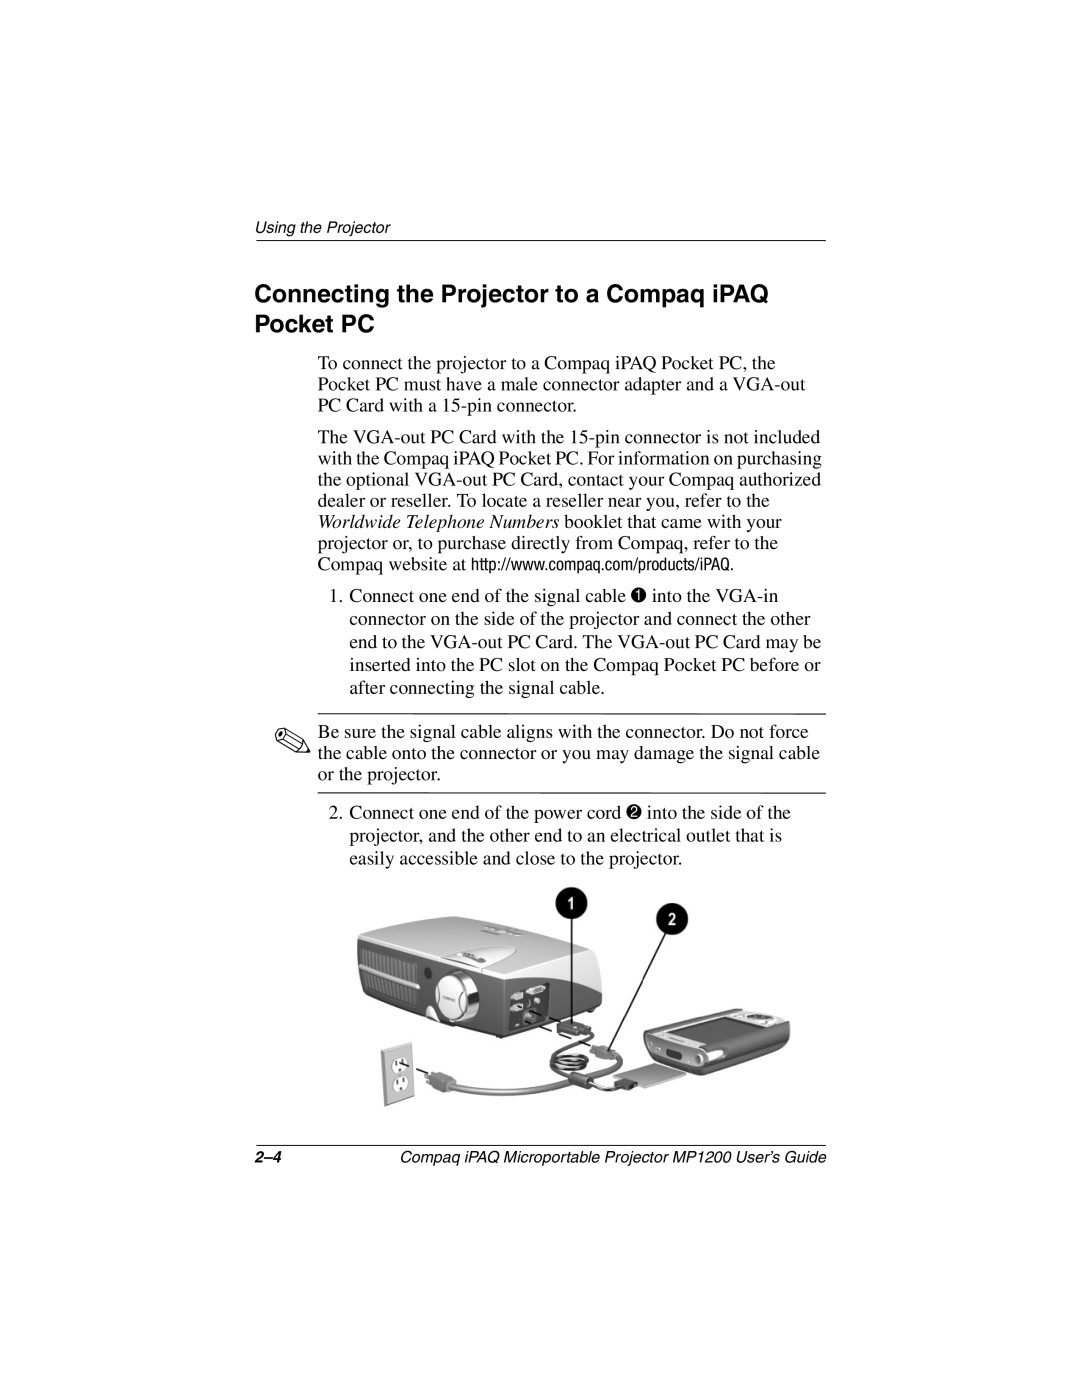 Compaq MP1200 manual Connecting the Projector to a Compaq iPAQ Pocket PC 